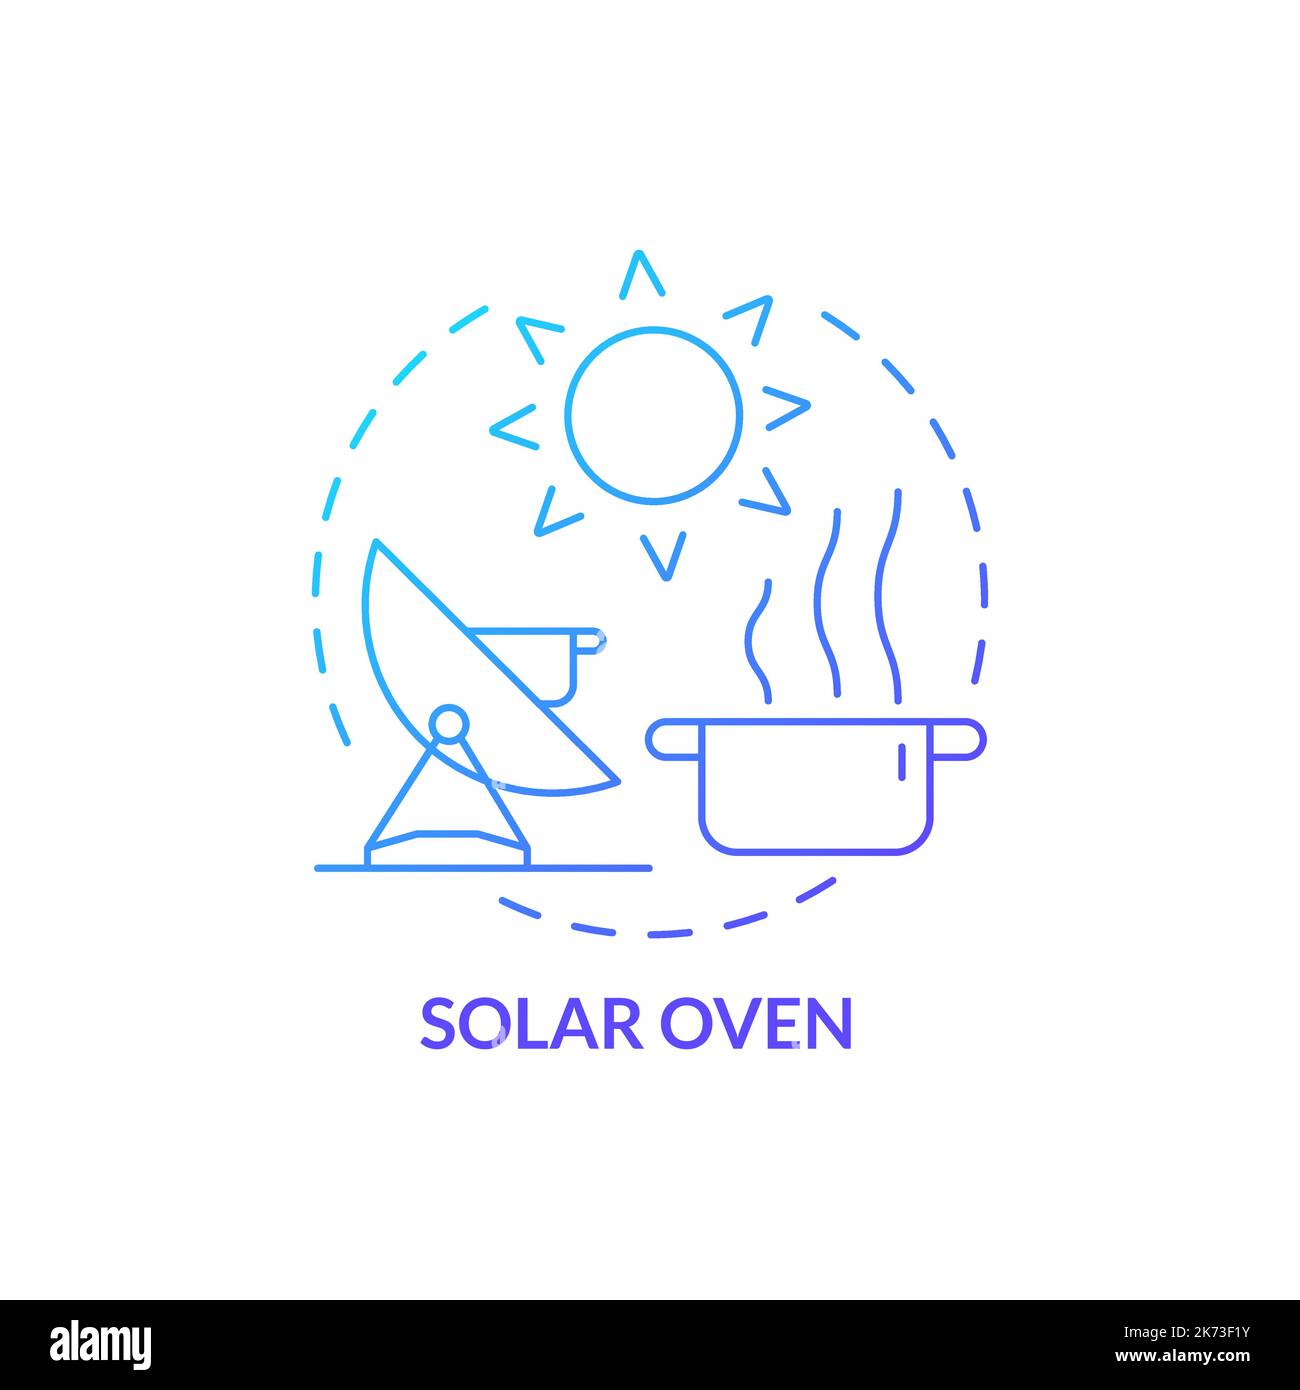 Solar oven blue gradient concept icon Stock Vector